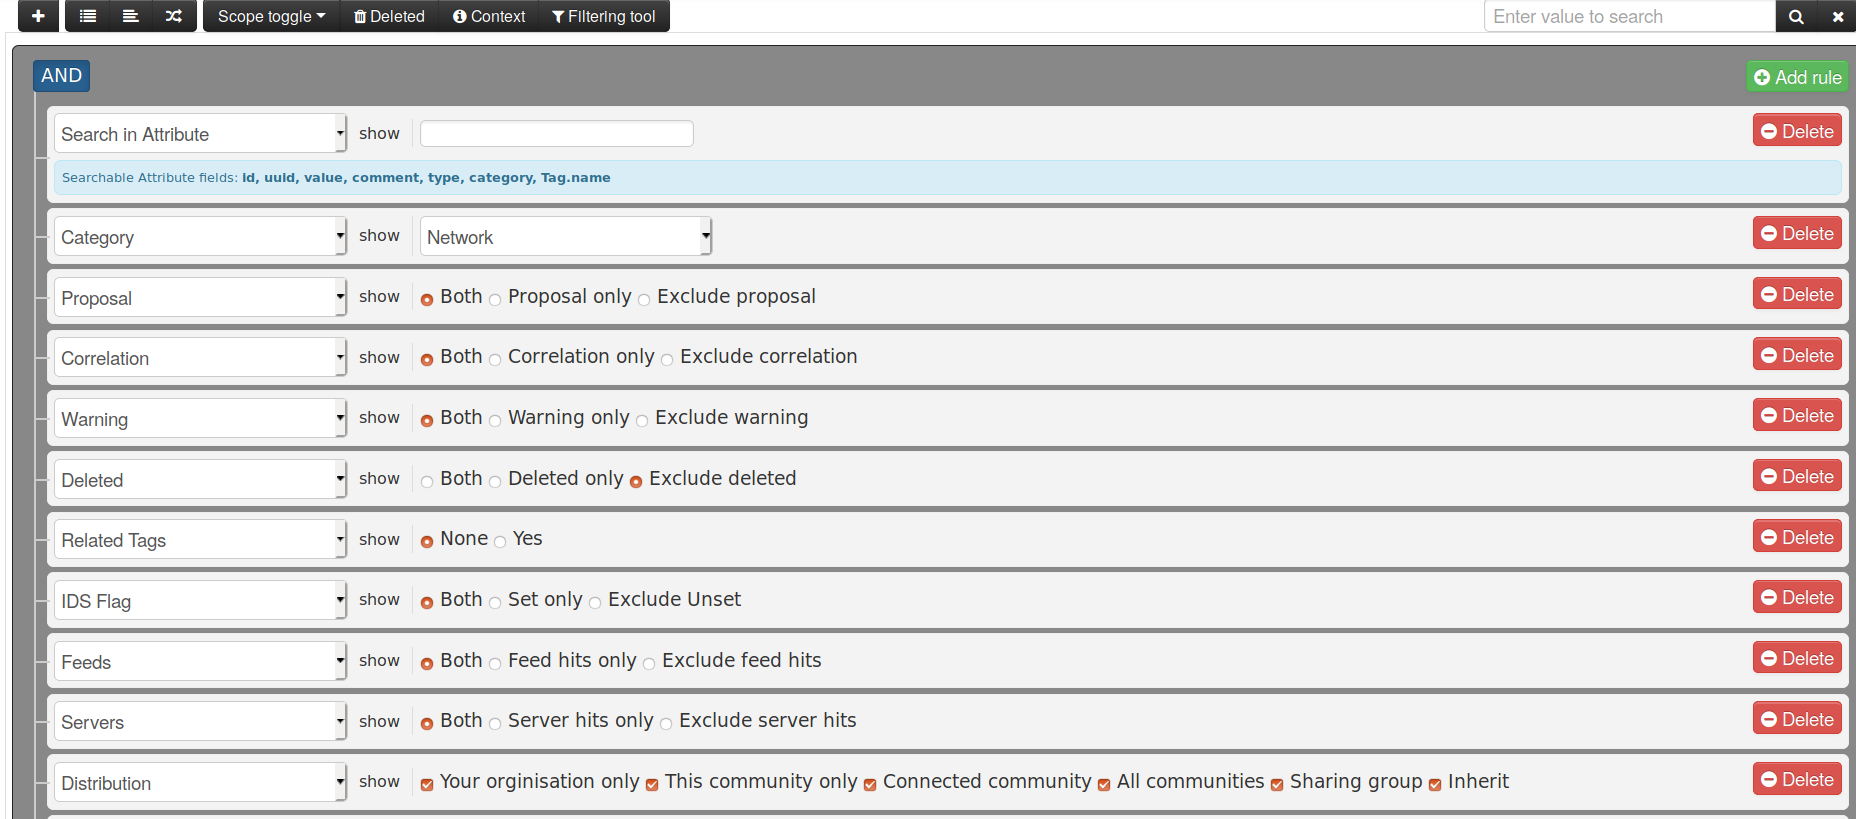 MISP screenshot - new attribute filtering tool at event level